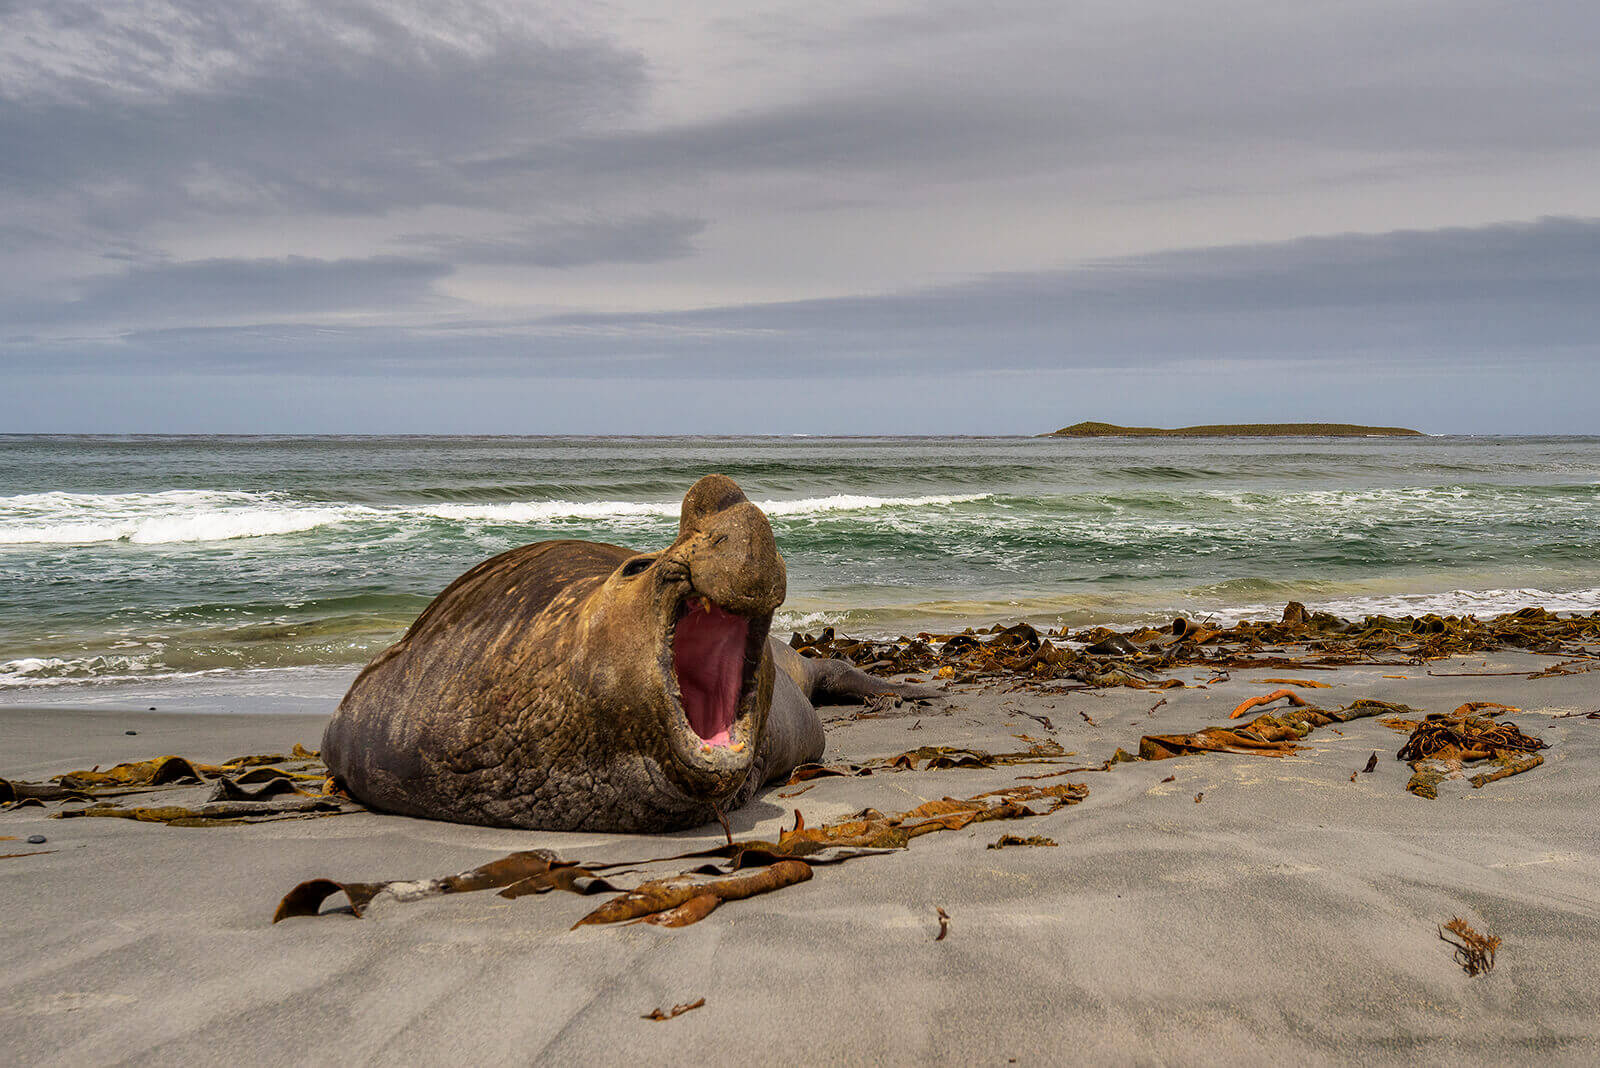 Elefante marino descansando en la costa. ©Natphoto